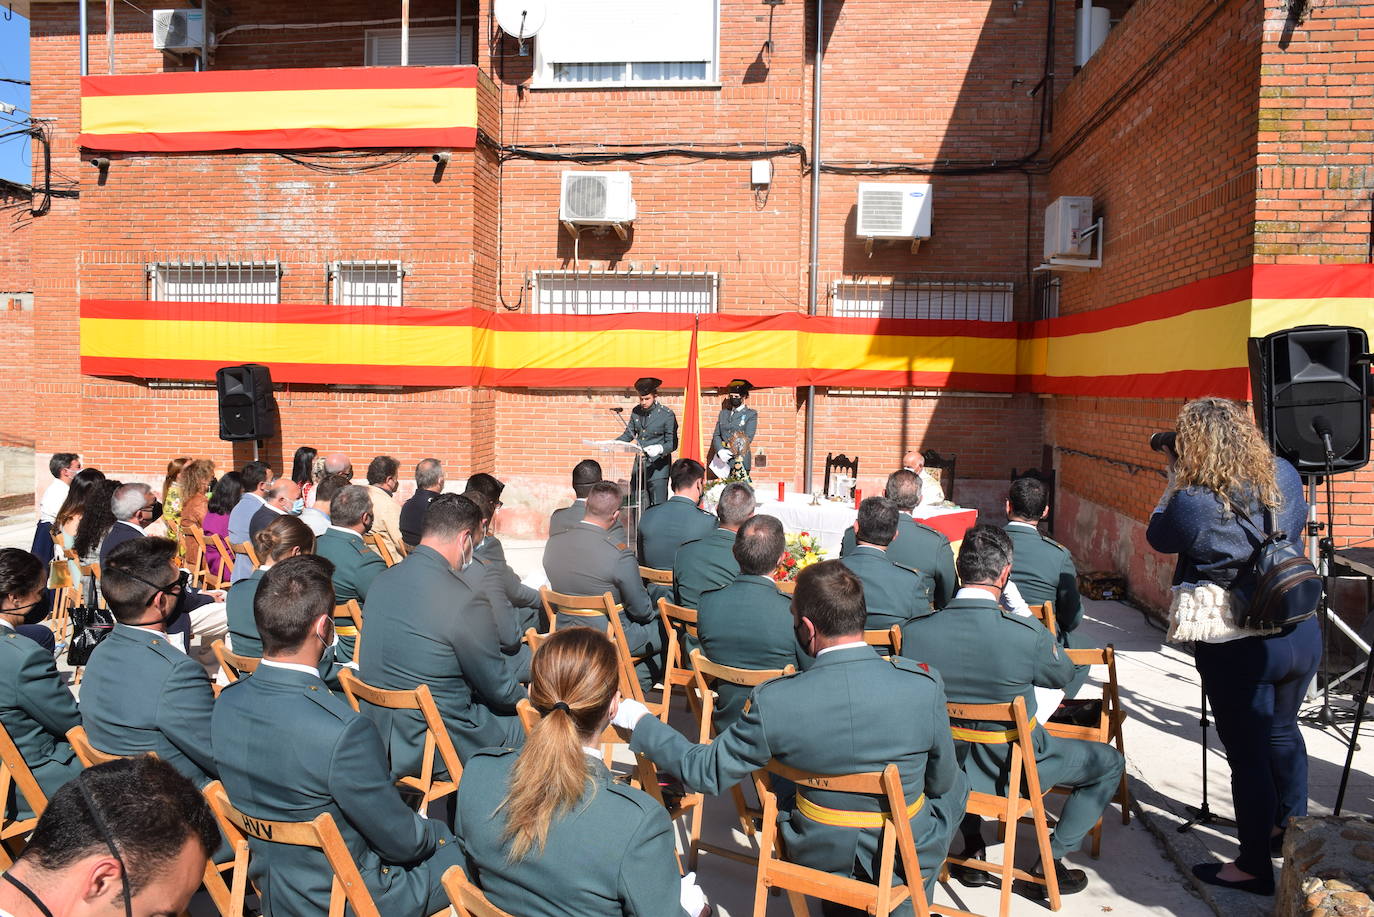 Fotos: La Guardia Civil celebra de nuevo su tradicional fiesta